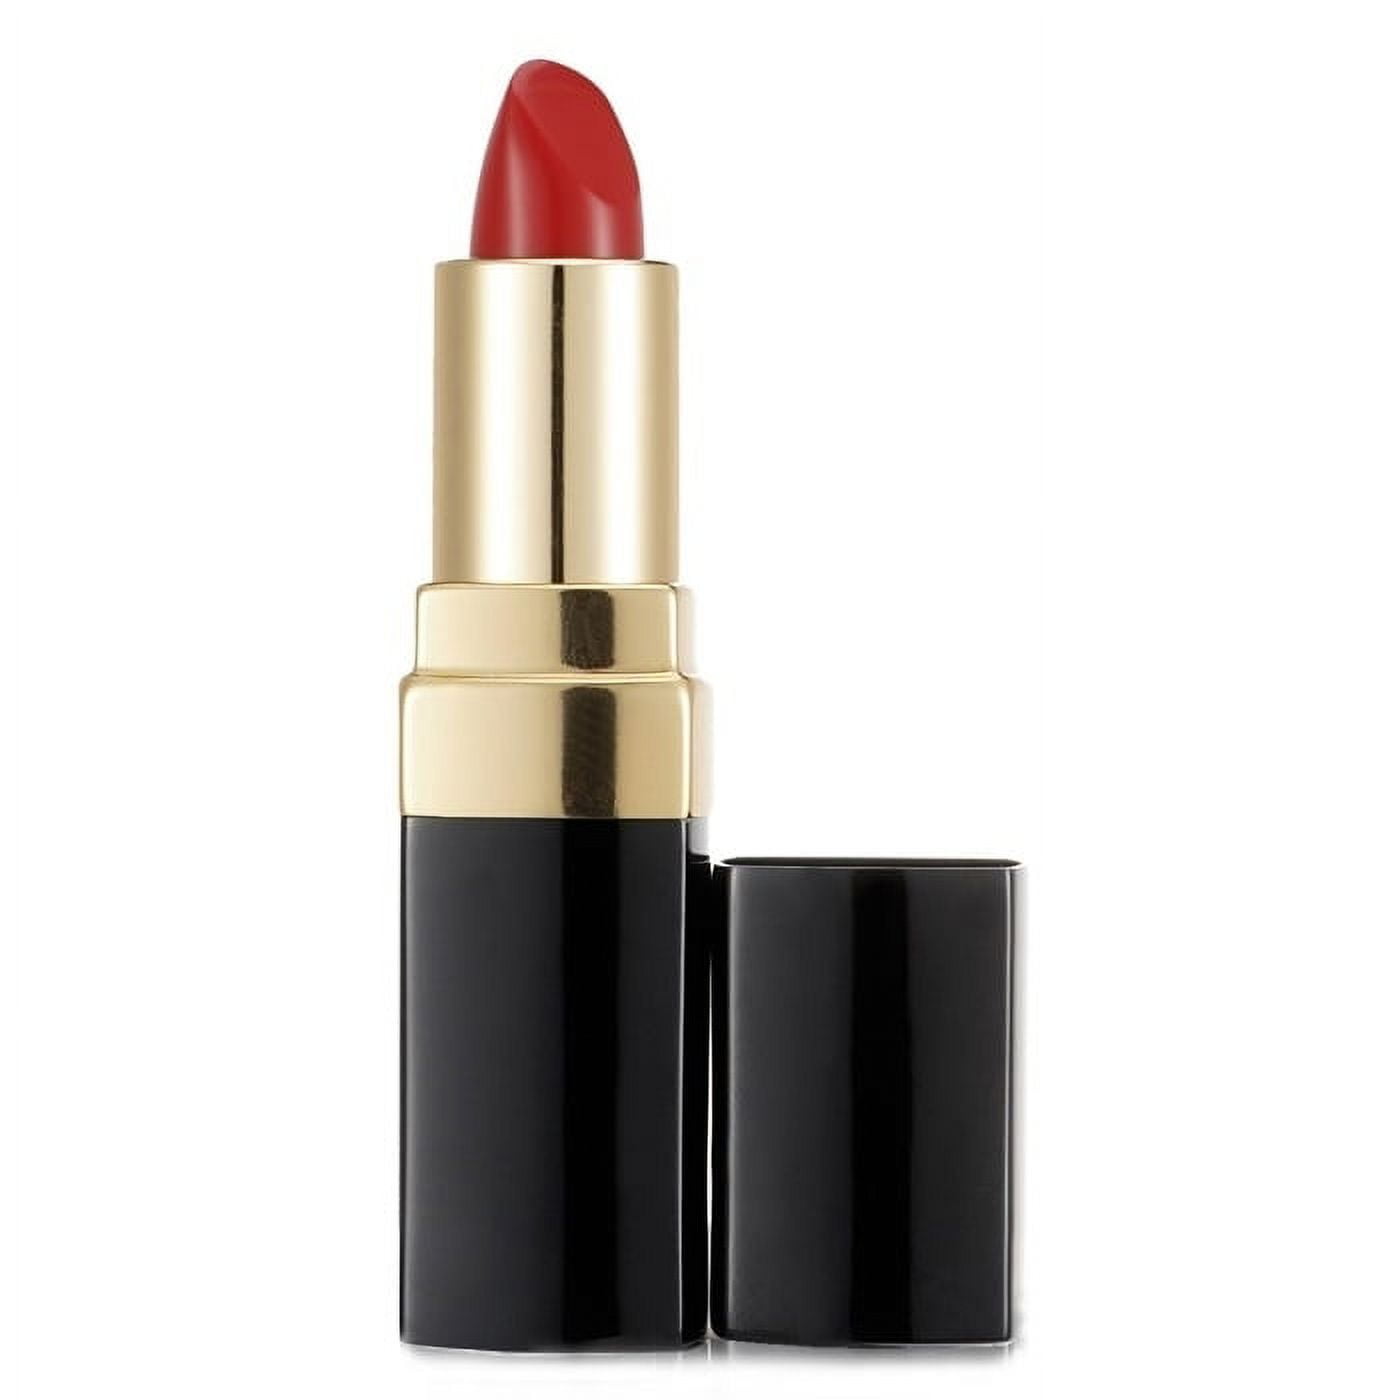 CHANEL “ADRIENNE” ROUGE COCO Ultra Hydrating Lip Colour #chanel #lipstick 